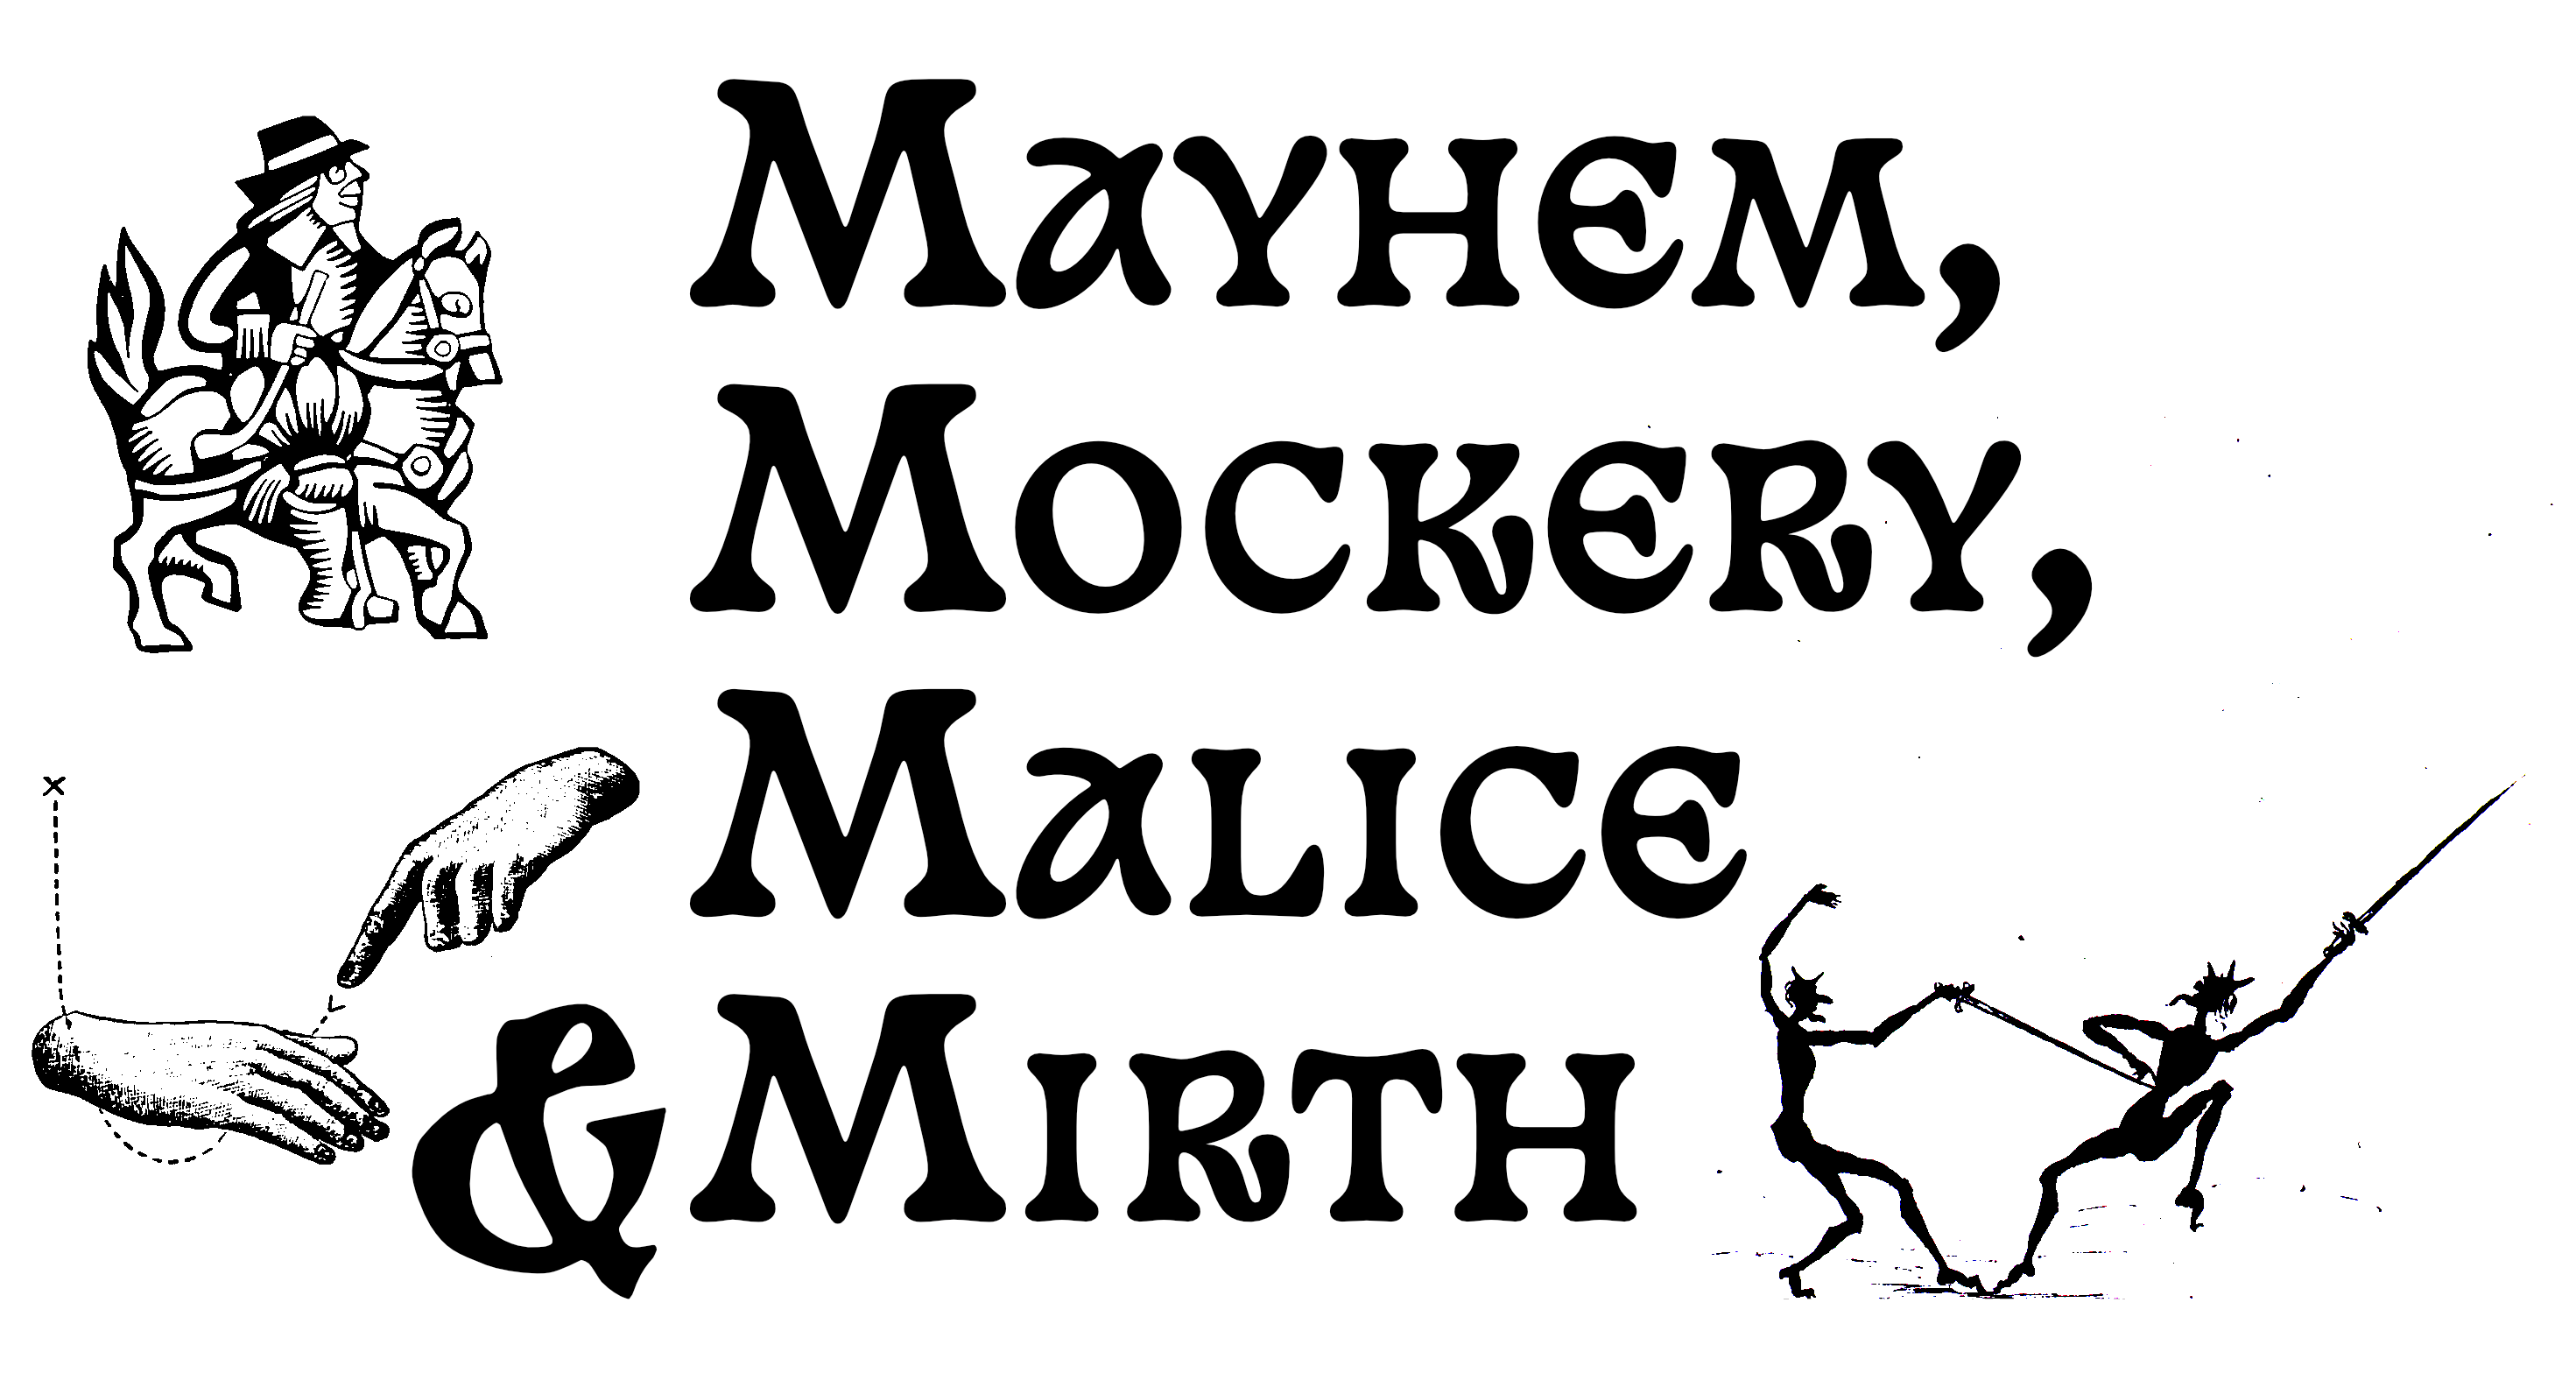 Mayhem, Mockery, Malice & Mirth